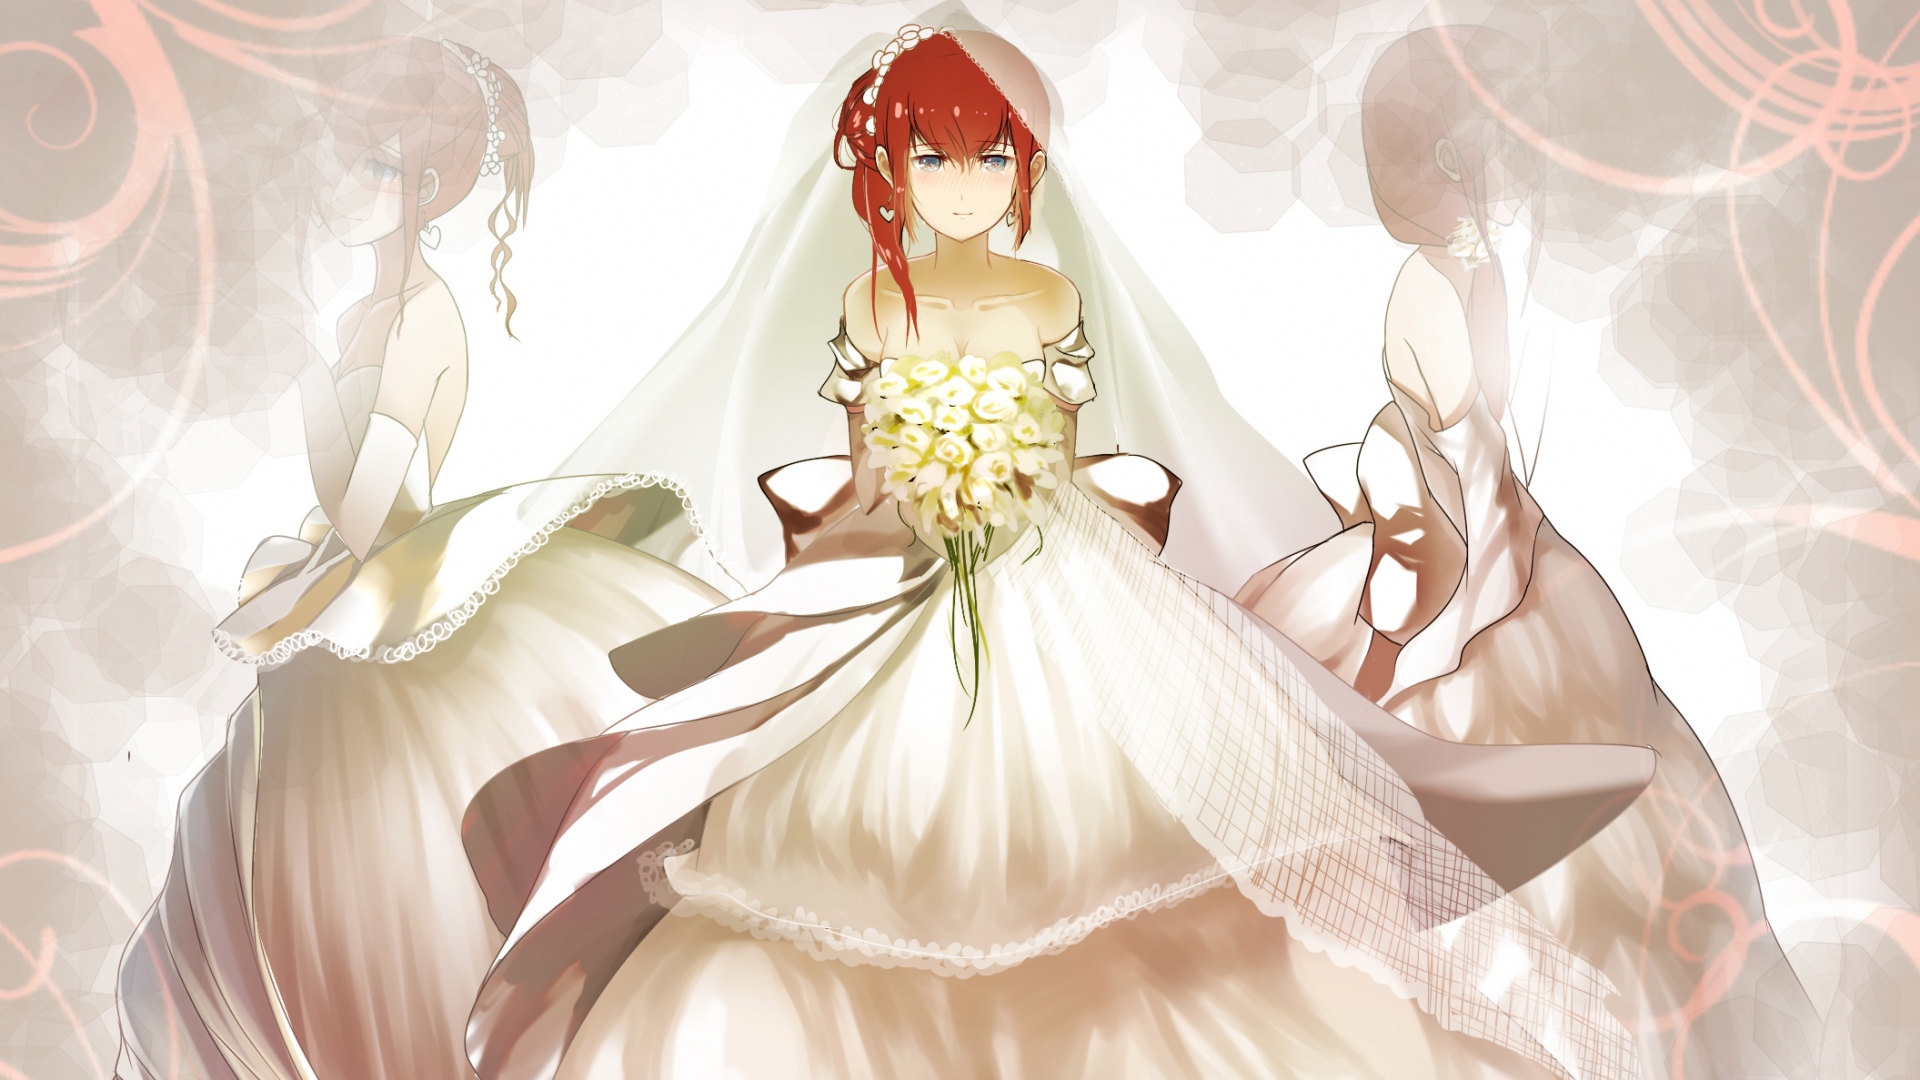 Wallpaper Steins Gate Girl Bride Dress Full HD 1080p